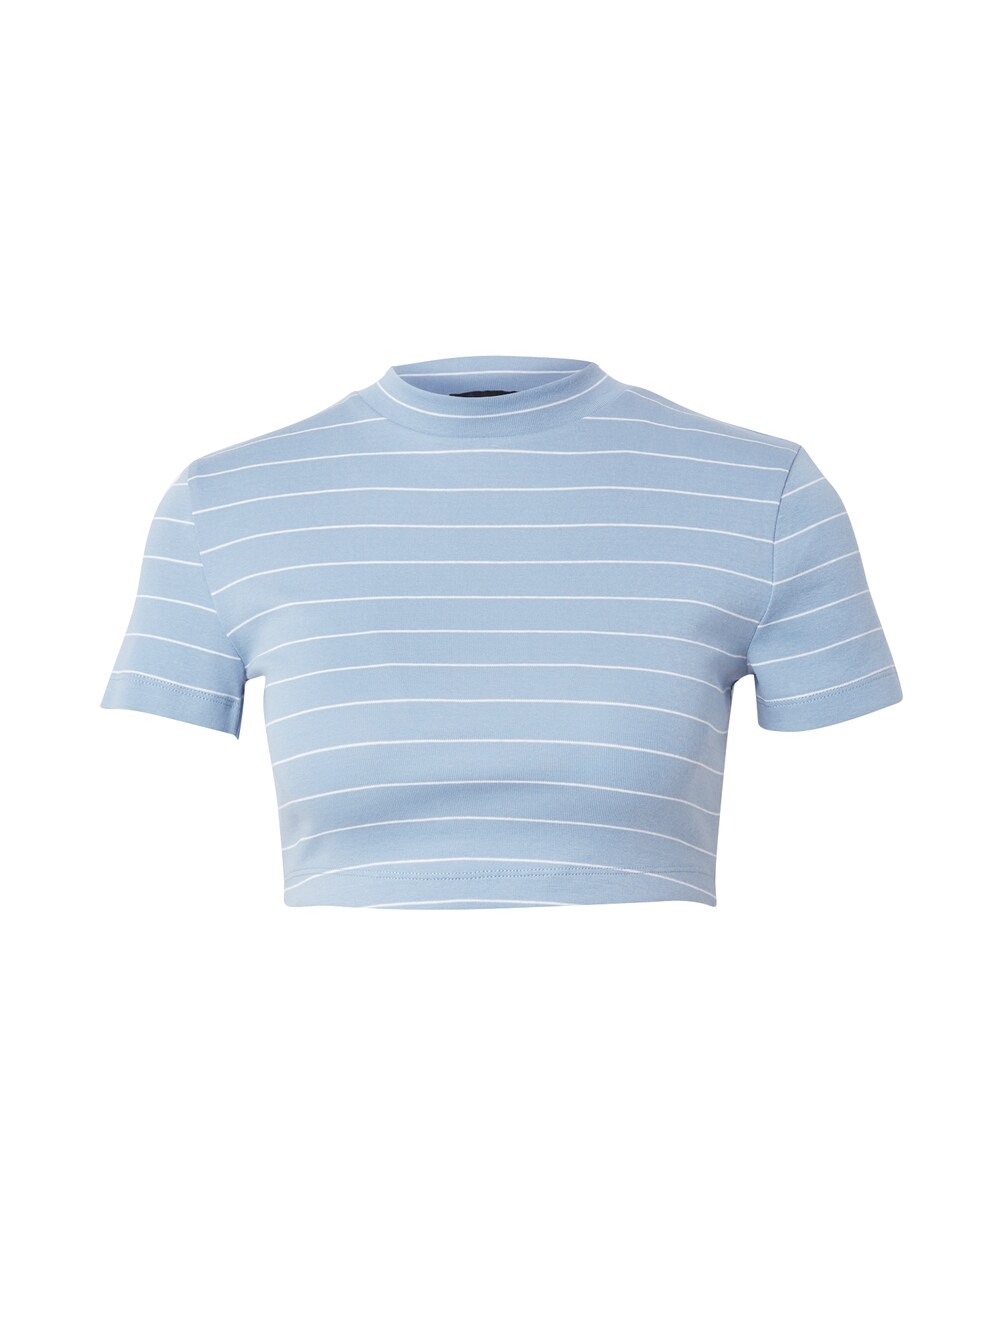 Рубашка Tally Weijl, светло-синий футболка tally weijl размер m черный